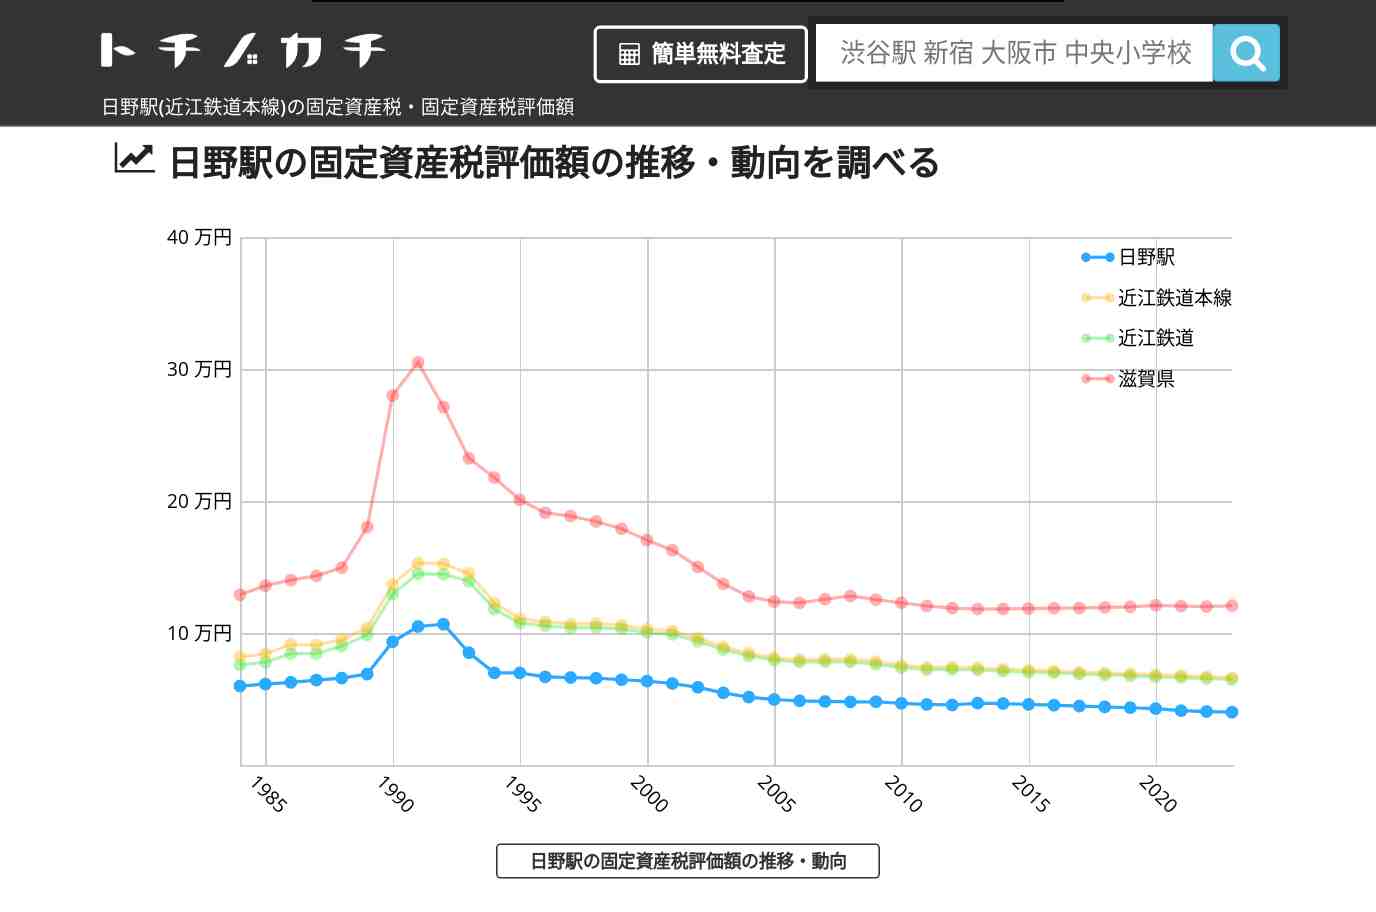 日野駅(近江鉄道本線)の固定資産税・固定資産税評価額 | トチノカチ